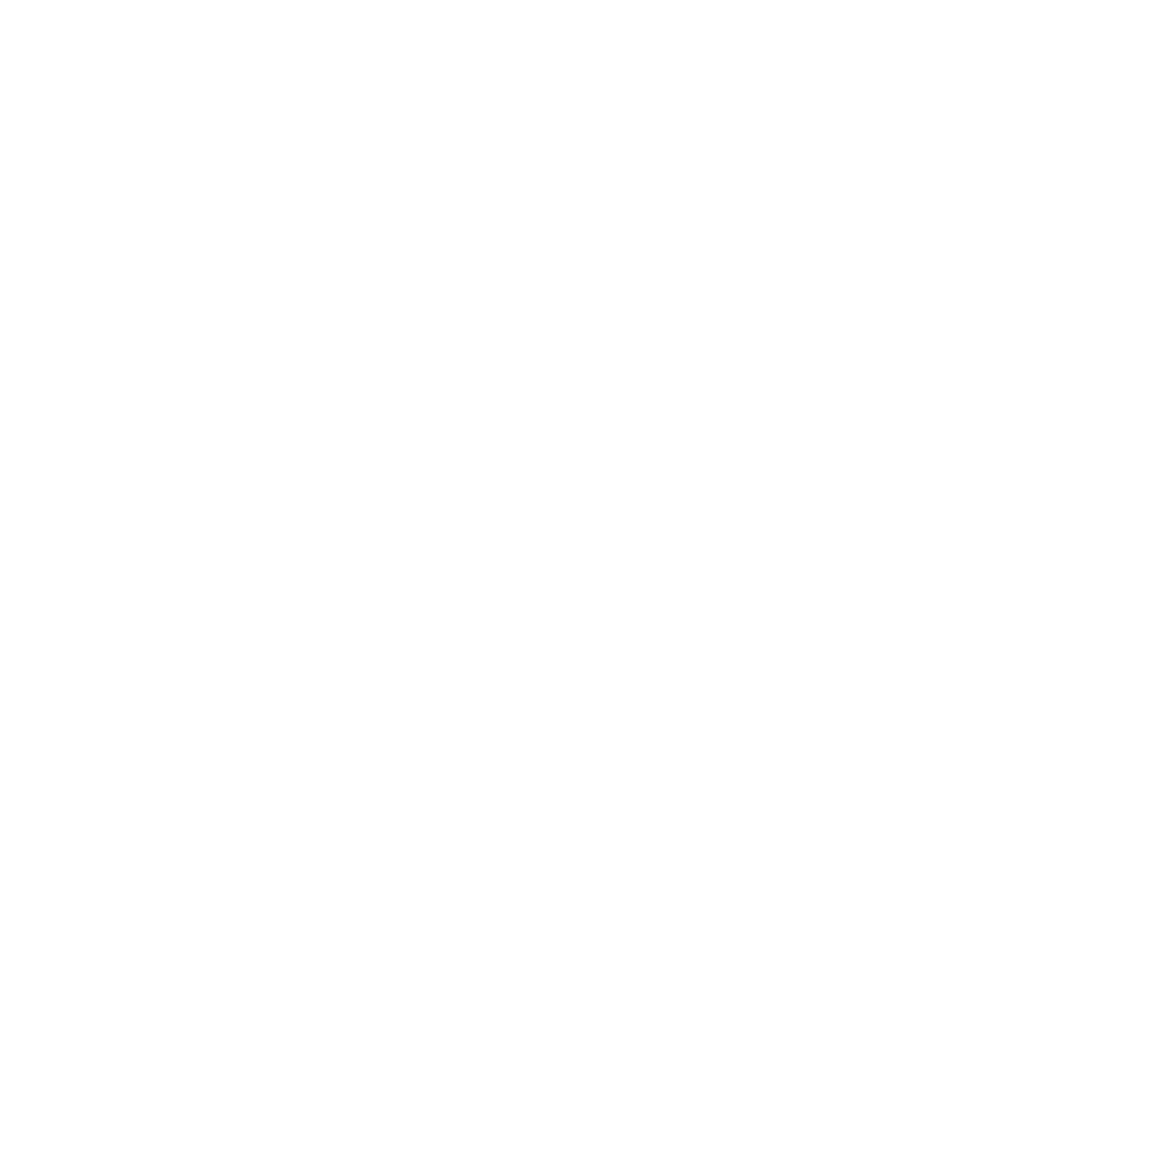 Dapple Baby Fragrance Free Bottle & Dish Liquid Soap, 34 fl oz - Dillons  Food Stores